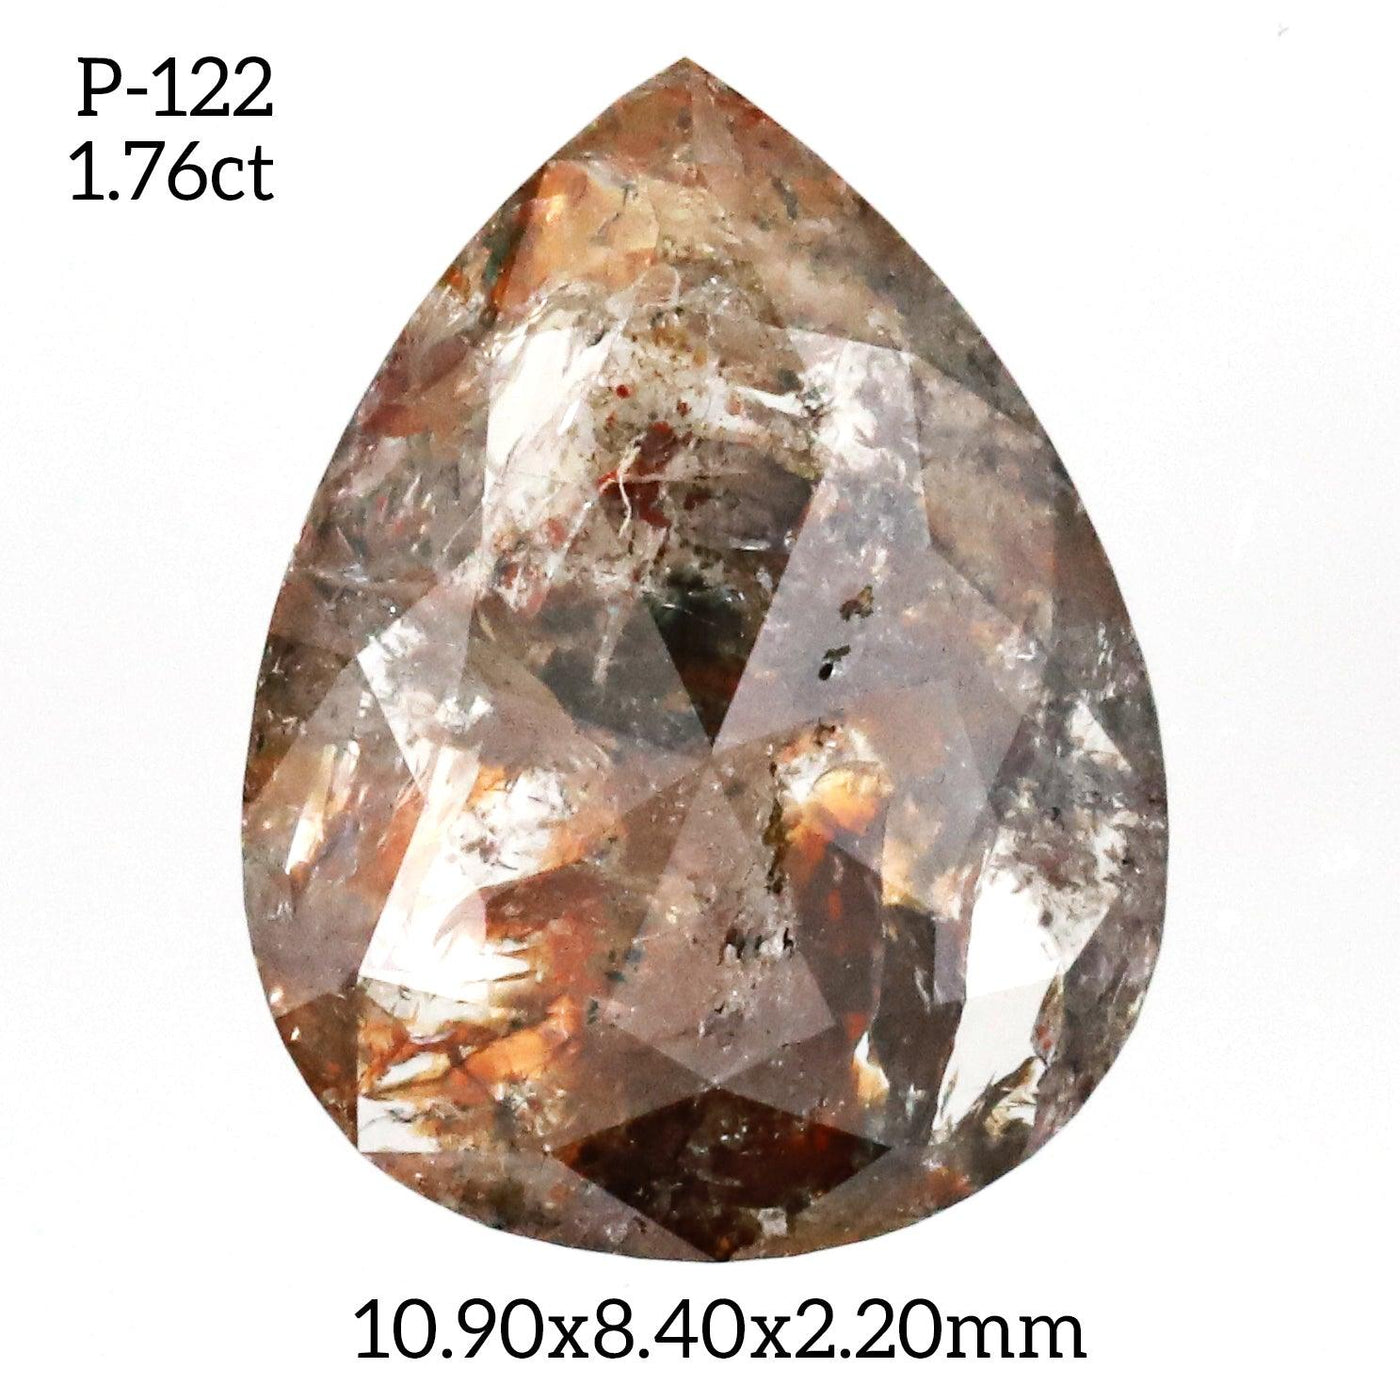 P122 - Salt and pepper pear diamond